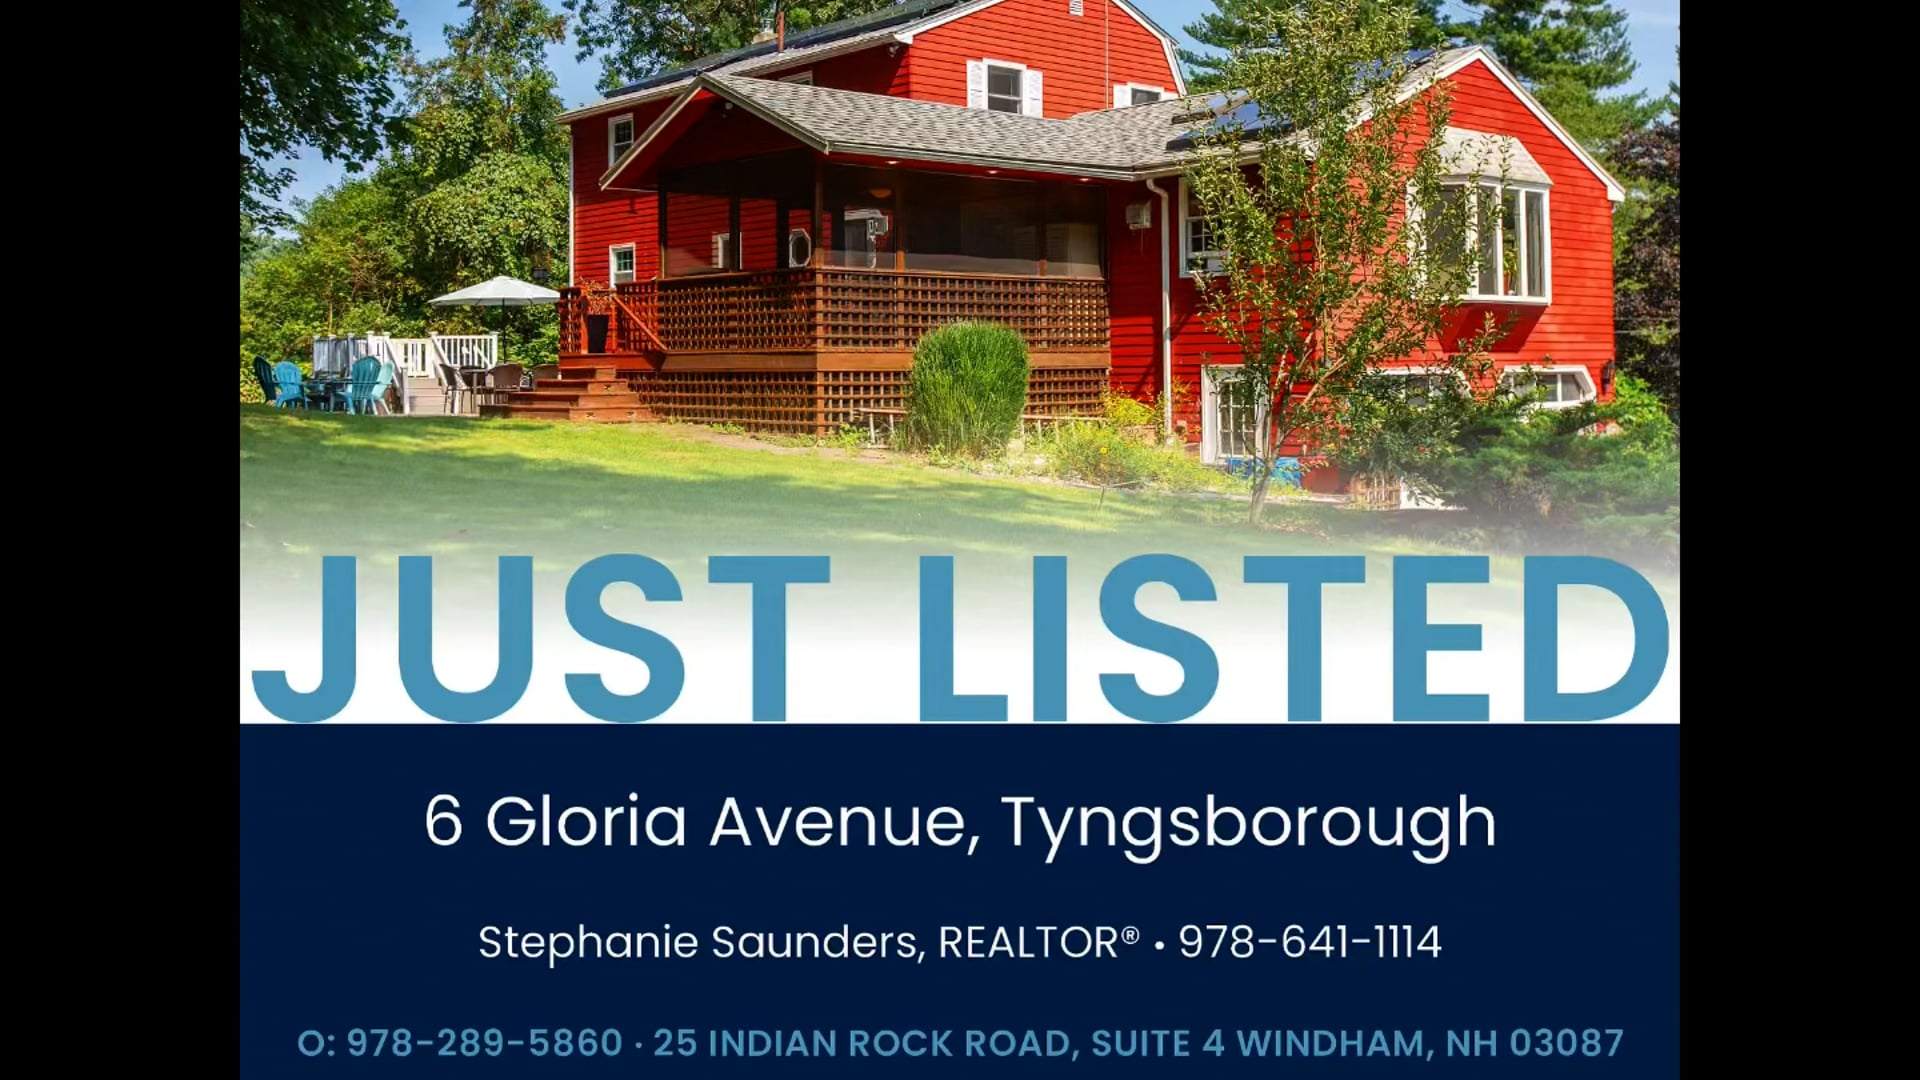 6 Gloria Avenue, Tyngsborough Massachusetts - Home for Sale